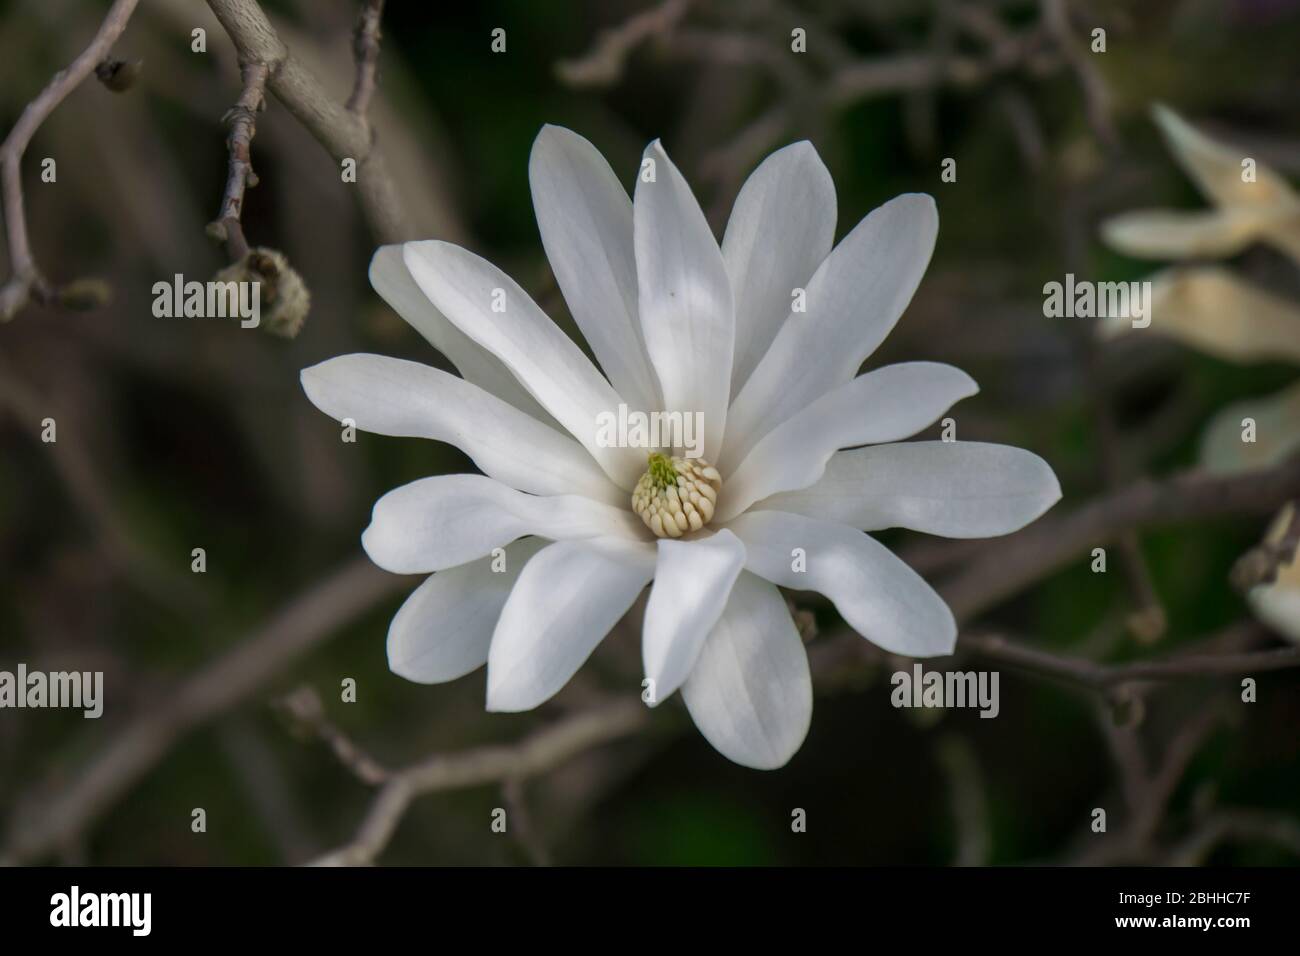 White flower close up Stock Photo